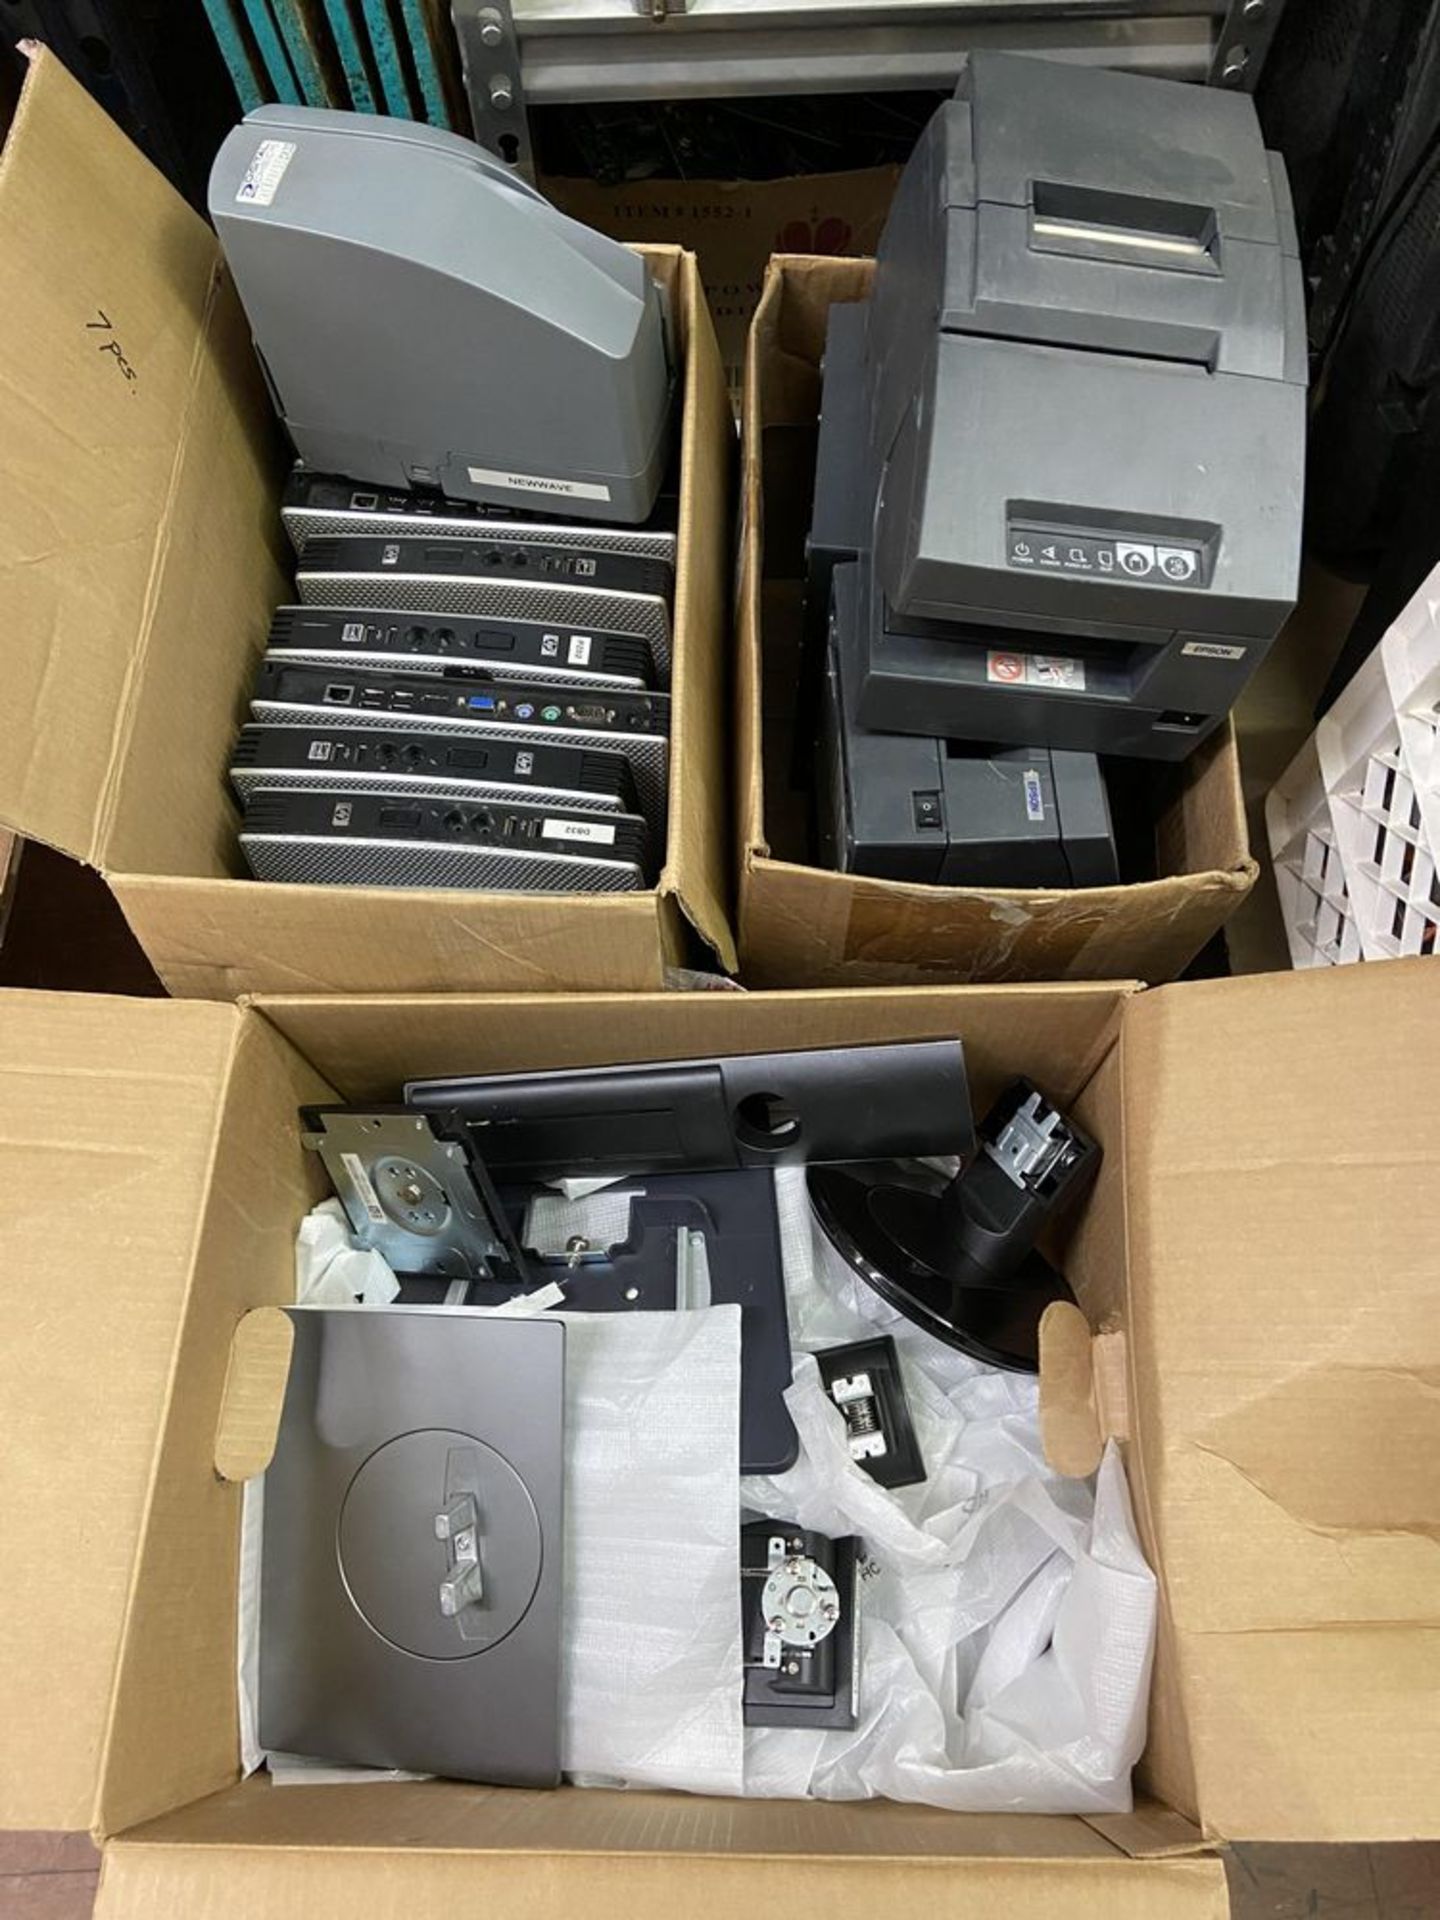 HP Towers, Epson Receipt Printers/Check Readers, POS Equipment Etc